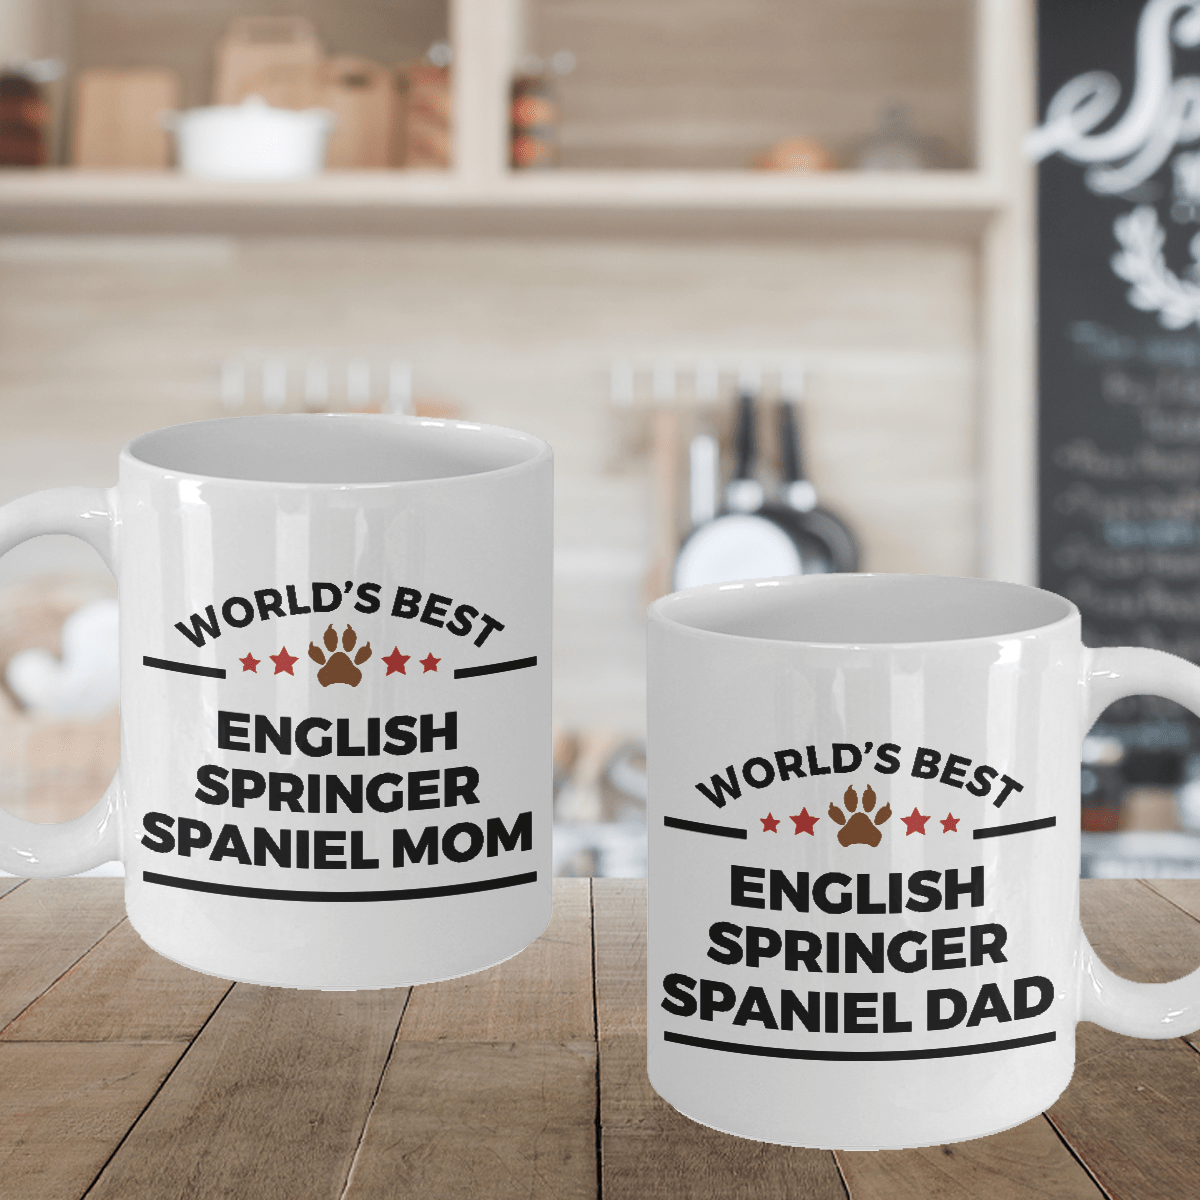 English Springer Spaniel Dog Dad and Mom Mug Set of 2